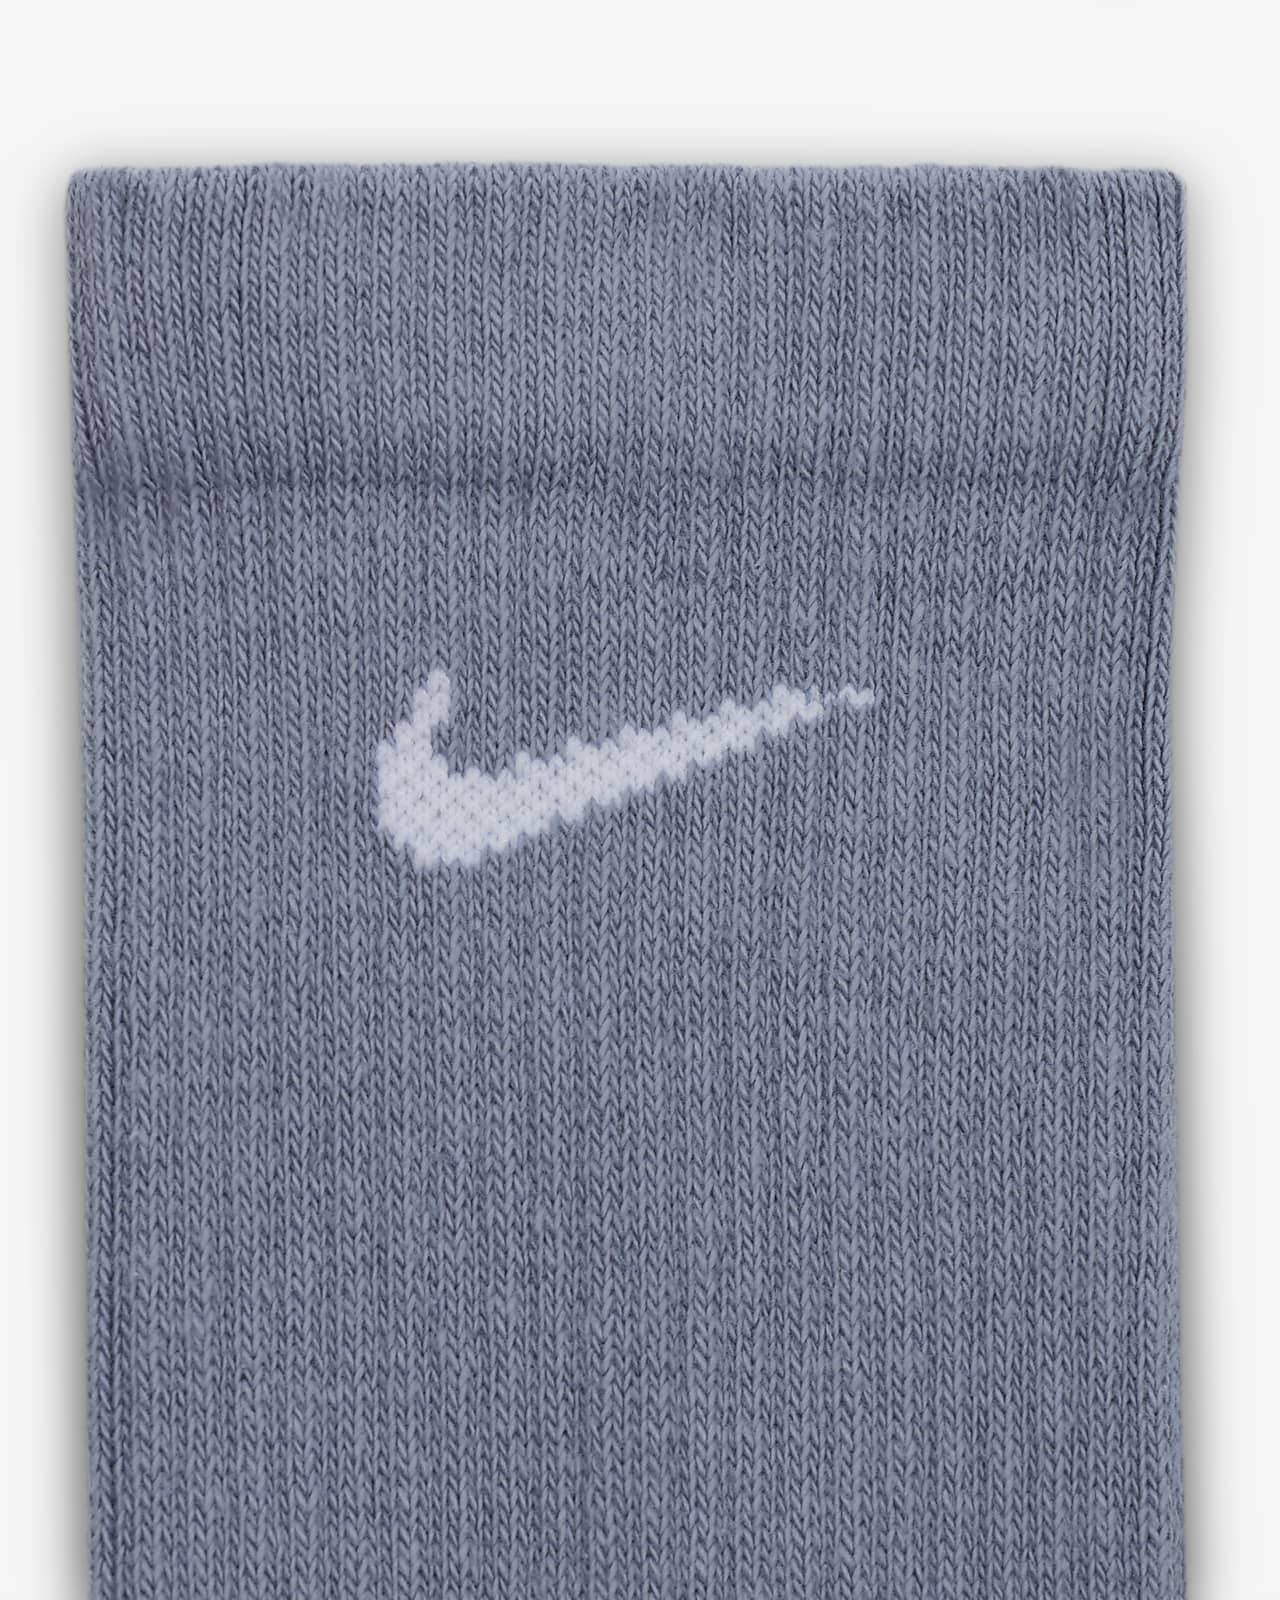 Nike Everyday Plus, Athletic Crew Socks, Single Pair, Dri Fit